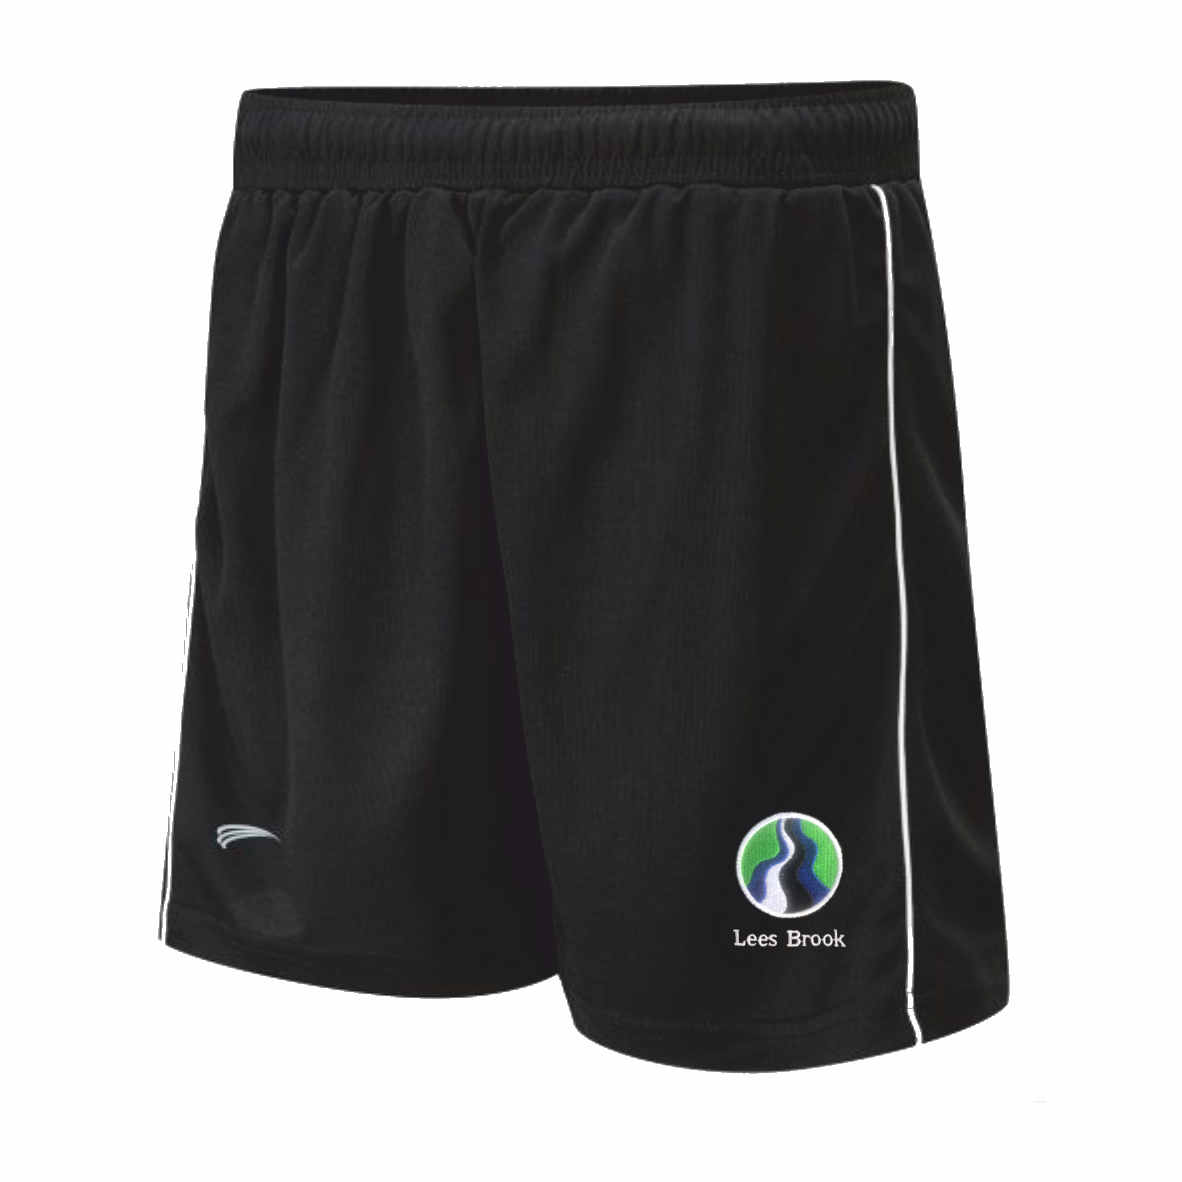 Lees Brook Black Sports Shorts Shorts w/Logo - Schoolwear Solutions